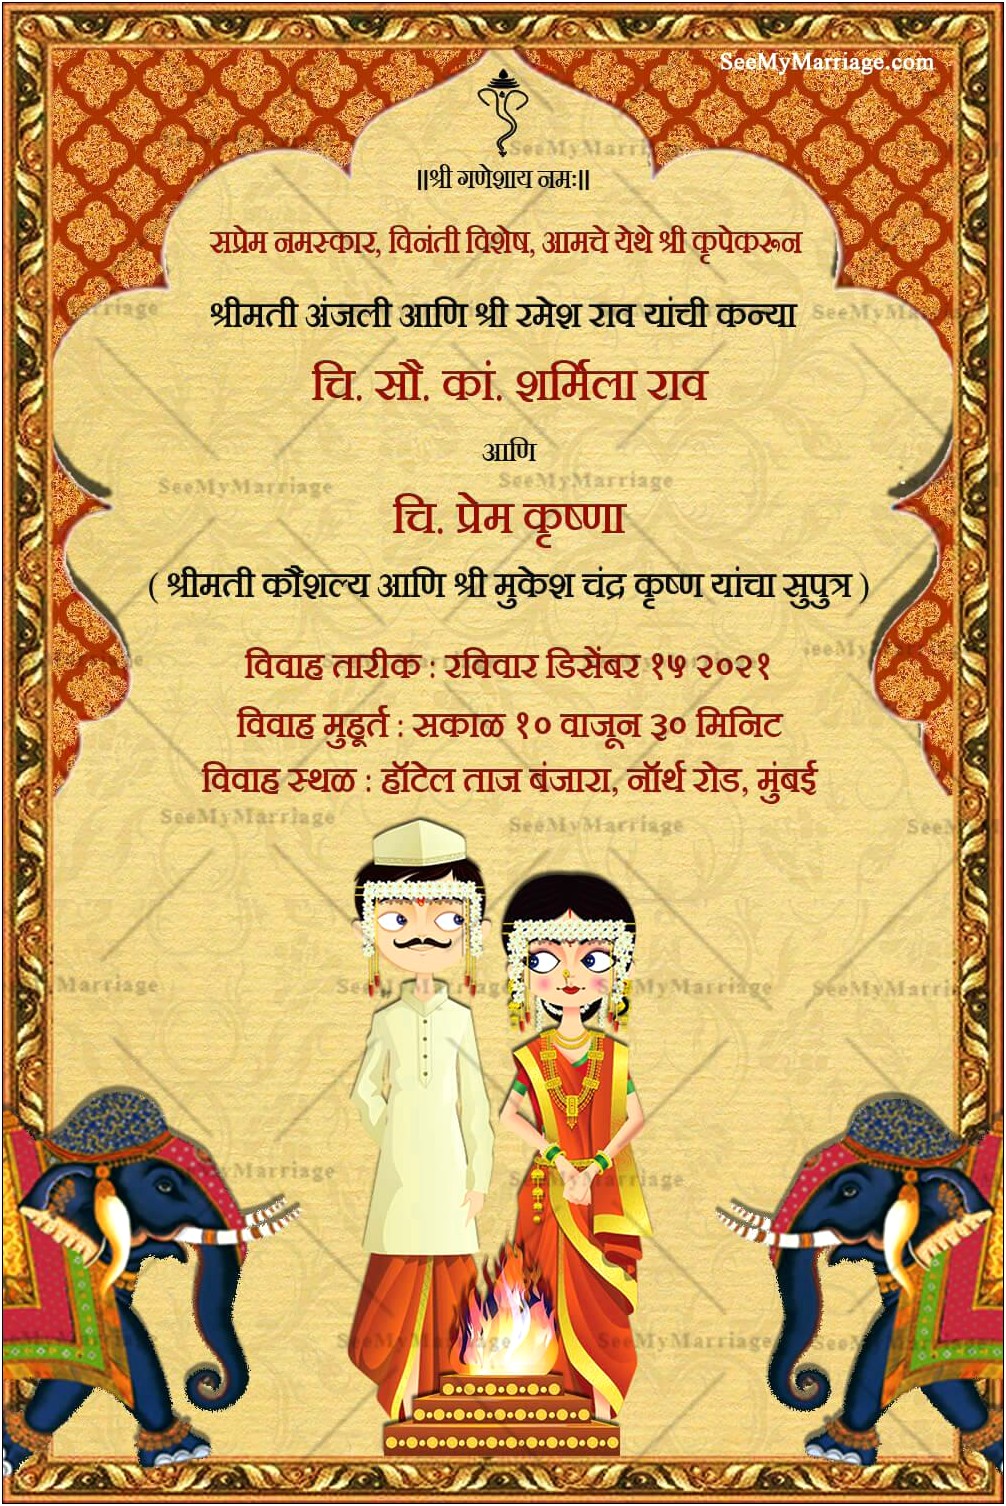 50th Wedding Anniversary Invitation In Marathi